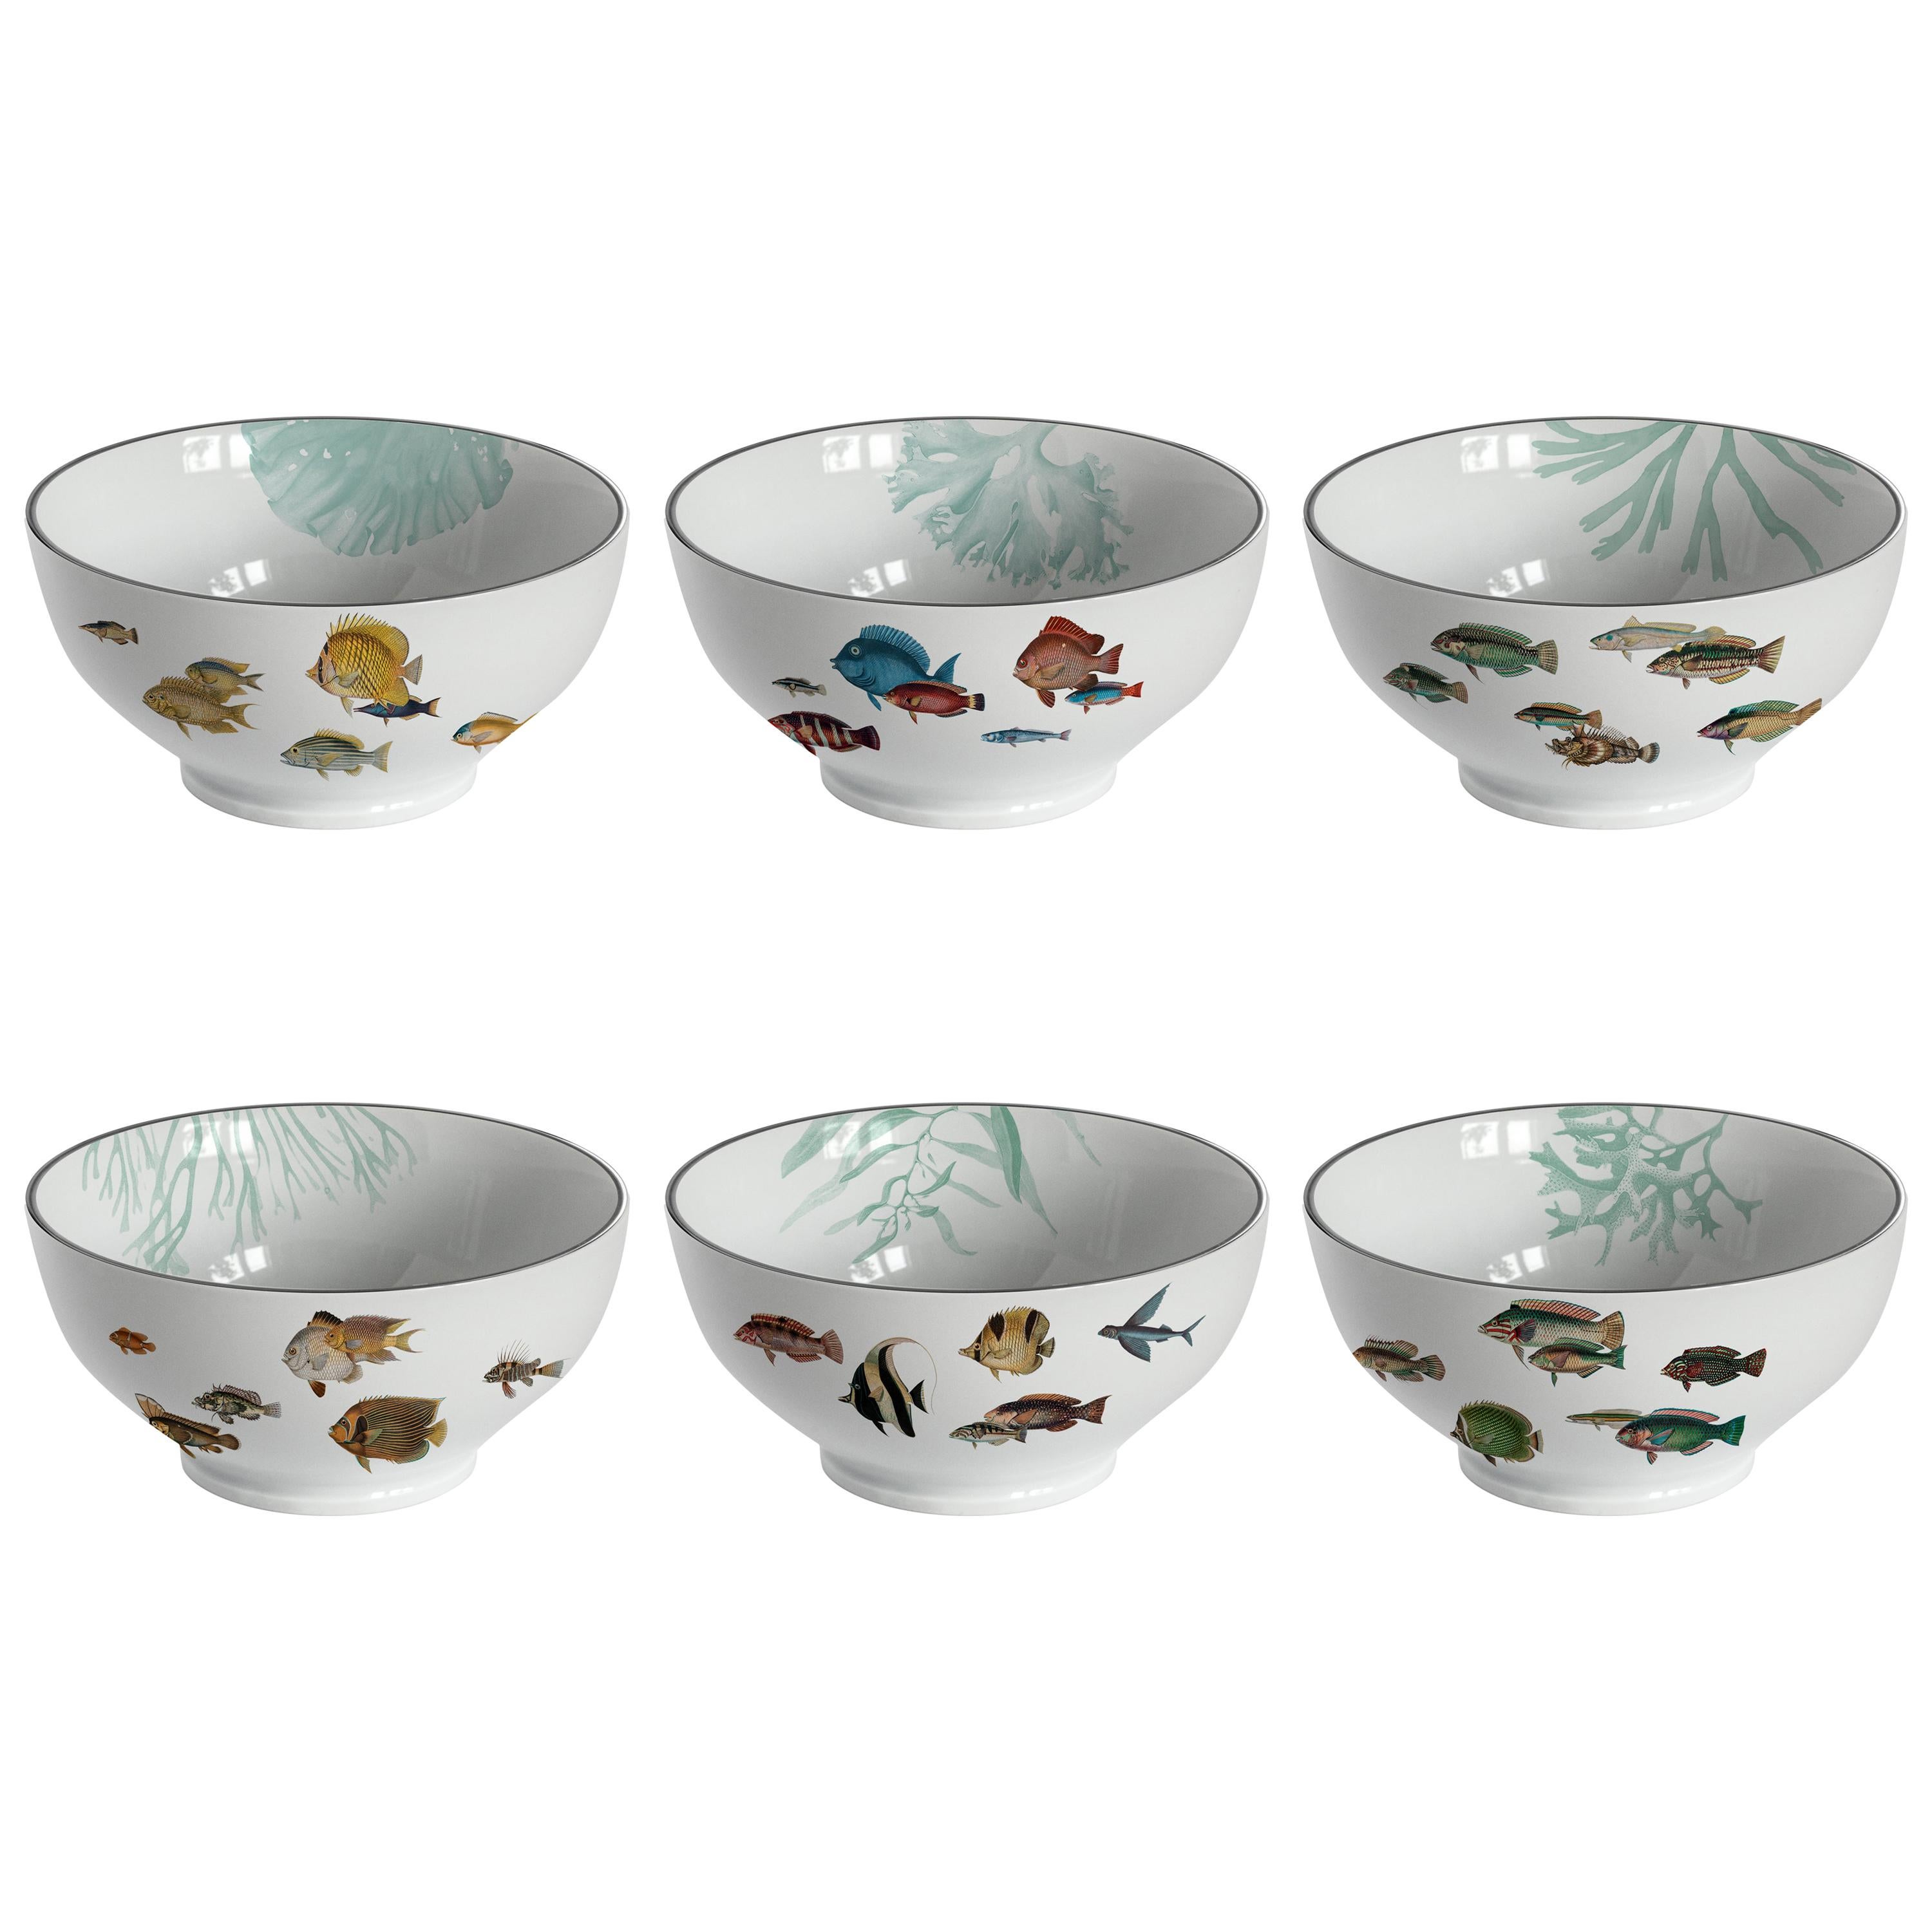 Amami, Six Contemporary Porcelain Bowls with Decorative Design